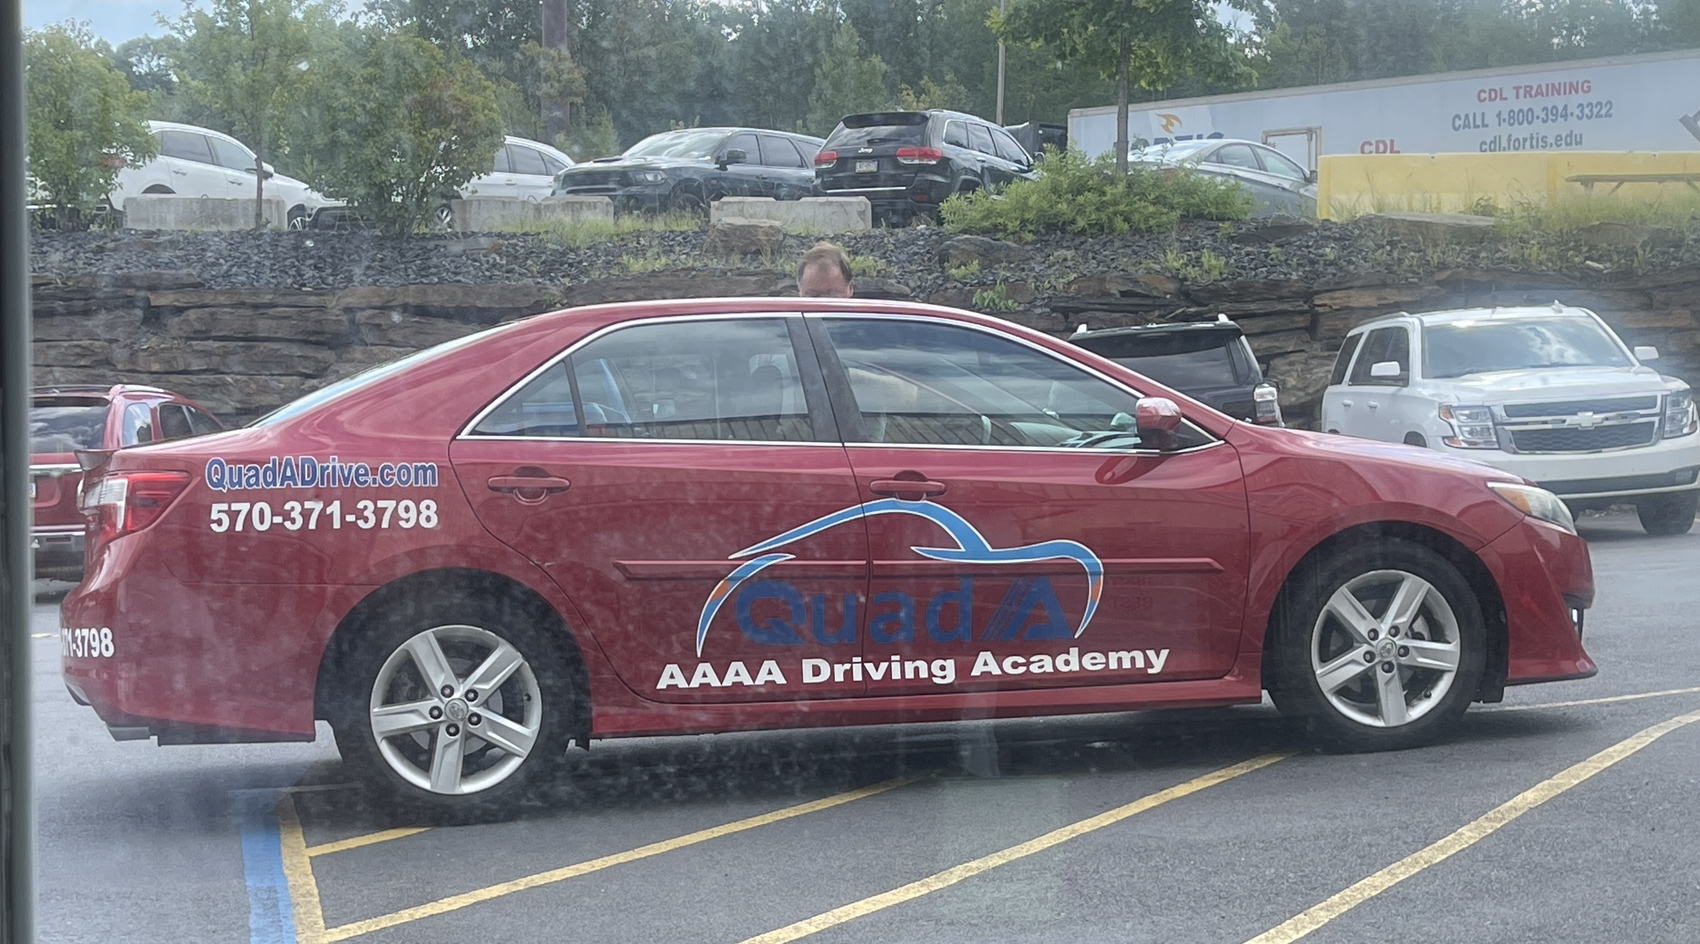 Quad A Driving Academy